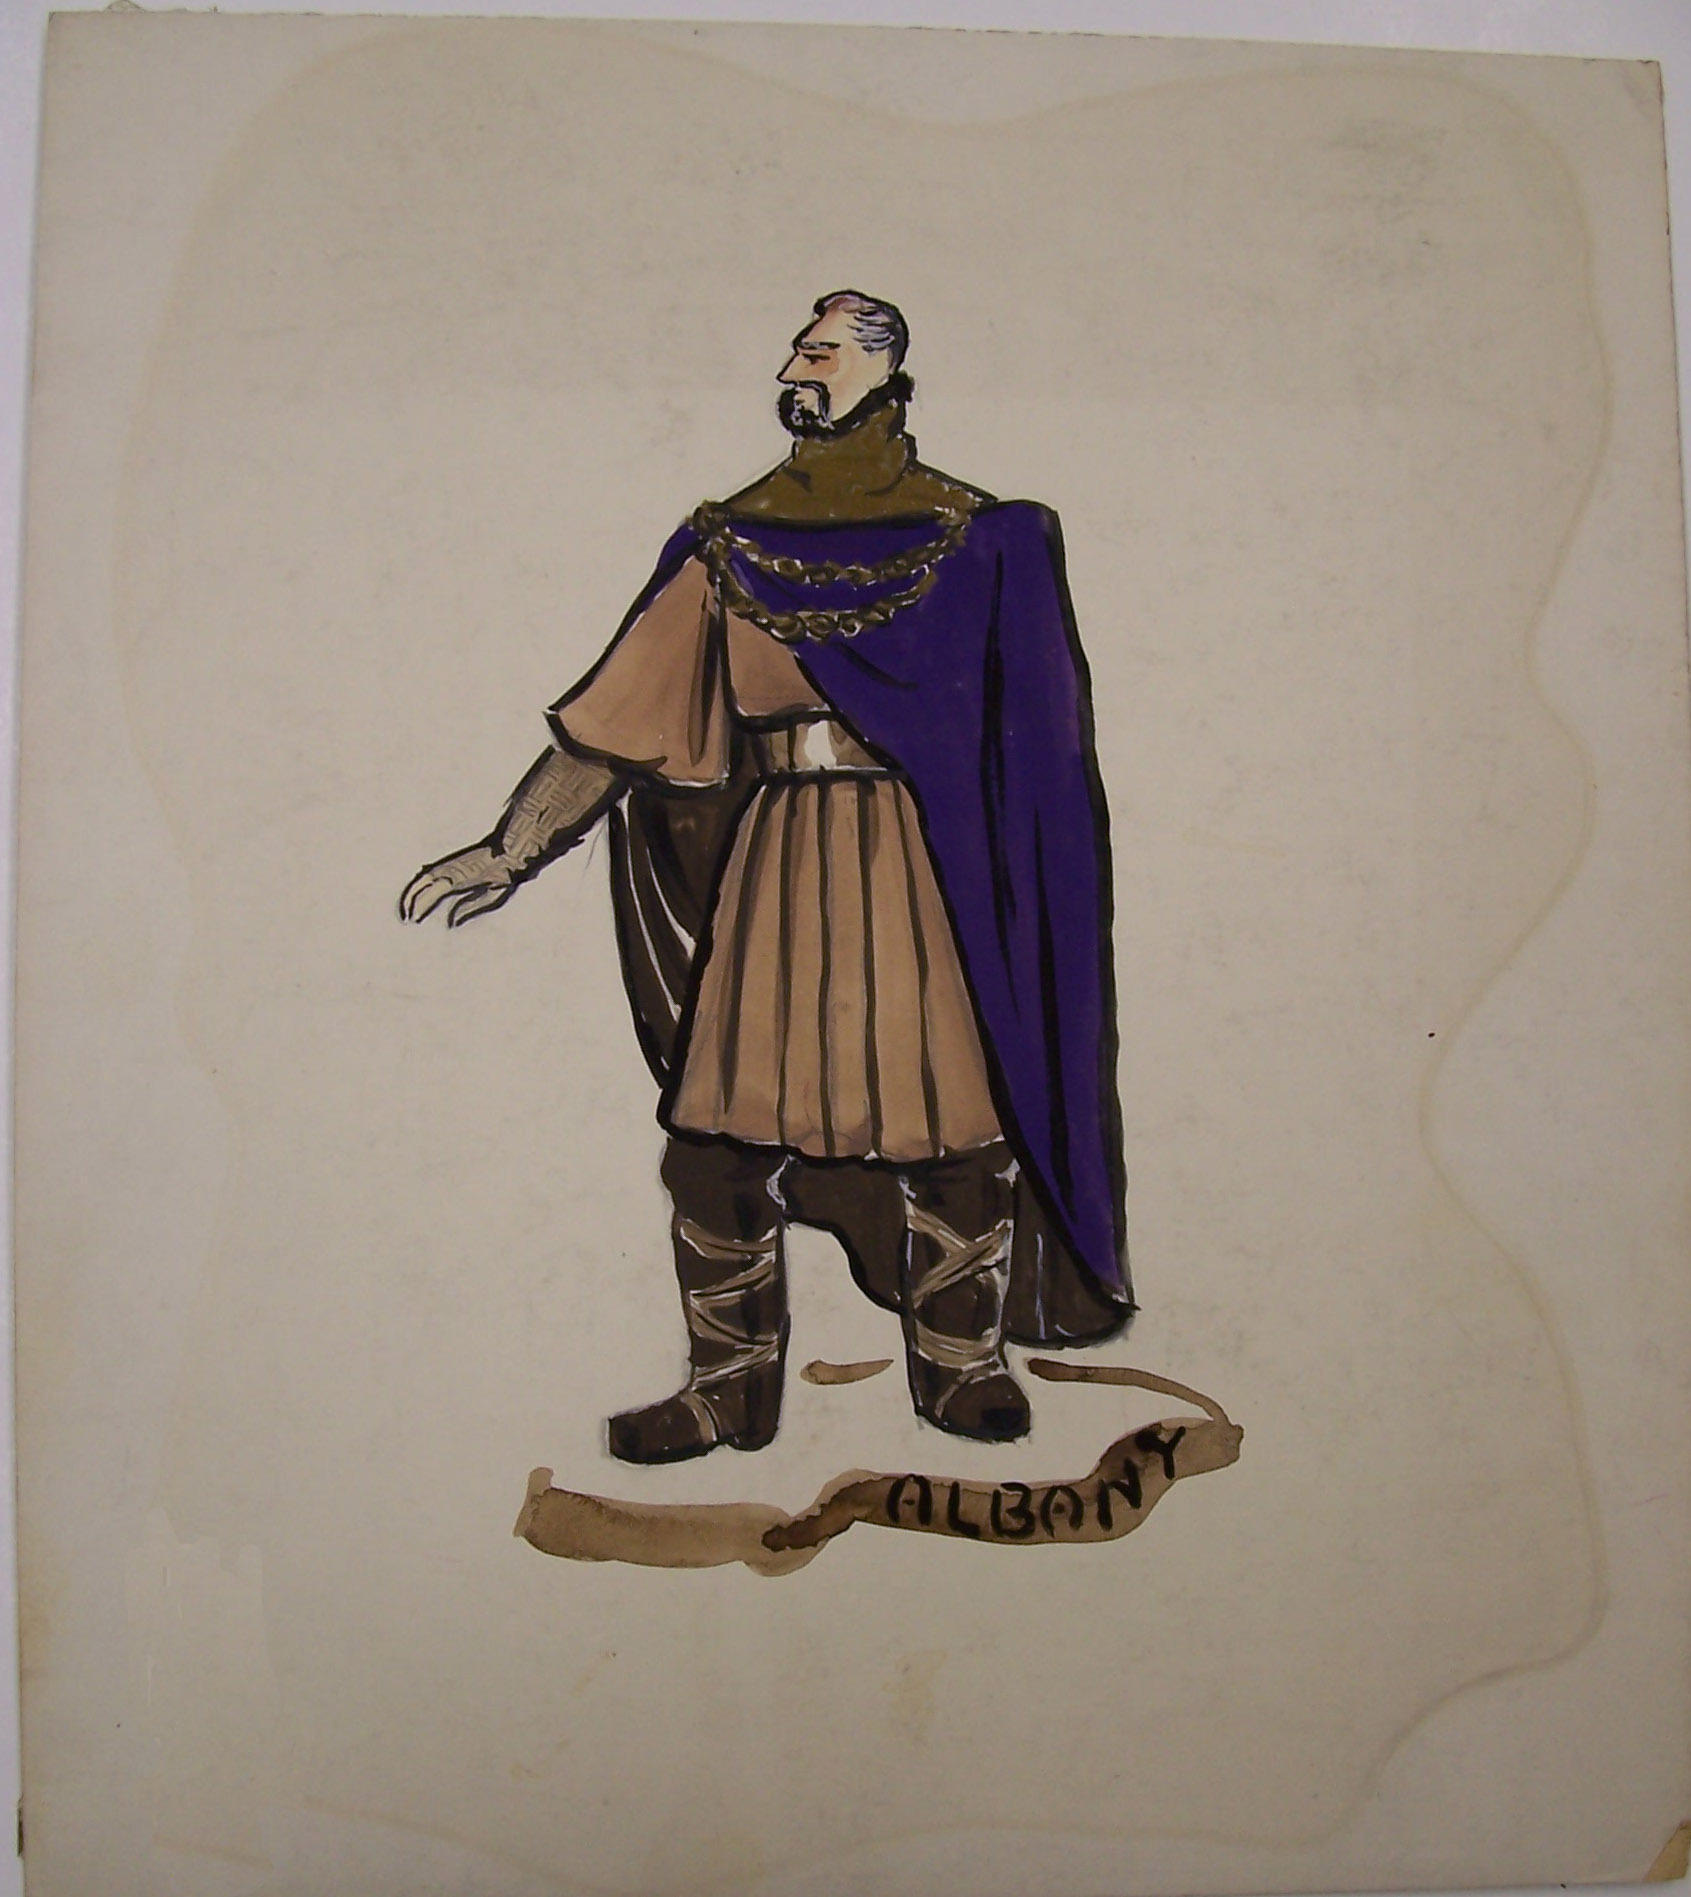 Whittaker costume design for King Lear